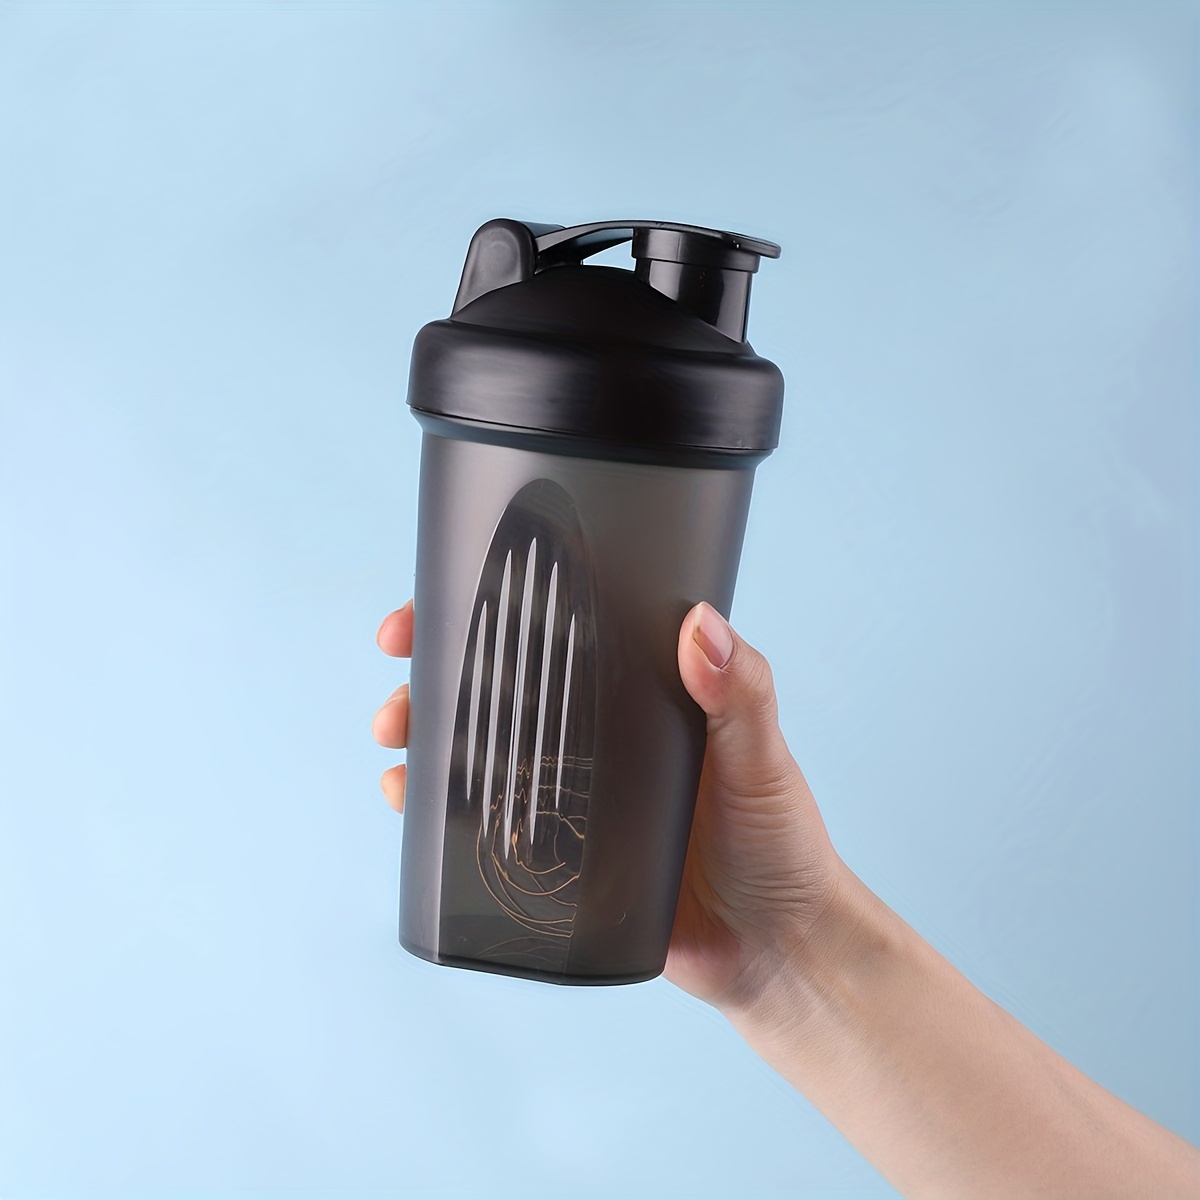 Pure Form Shaker Bottle with Blender Ball, 600mL